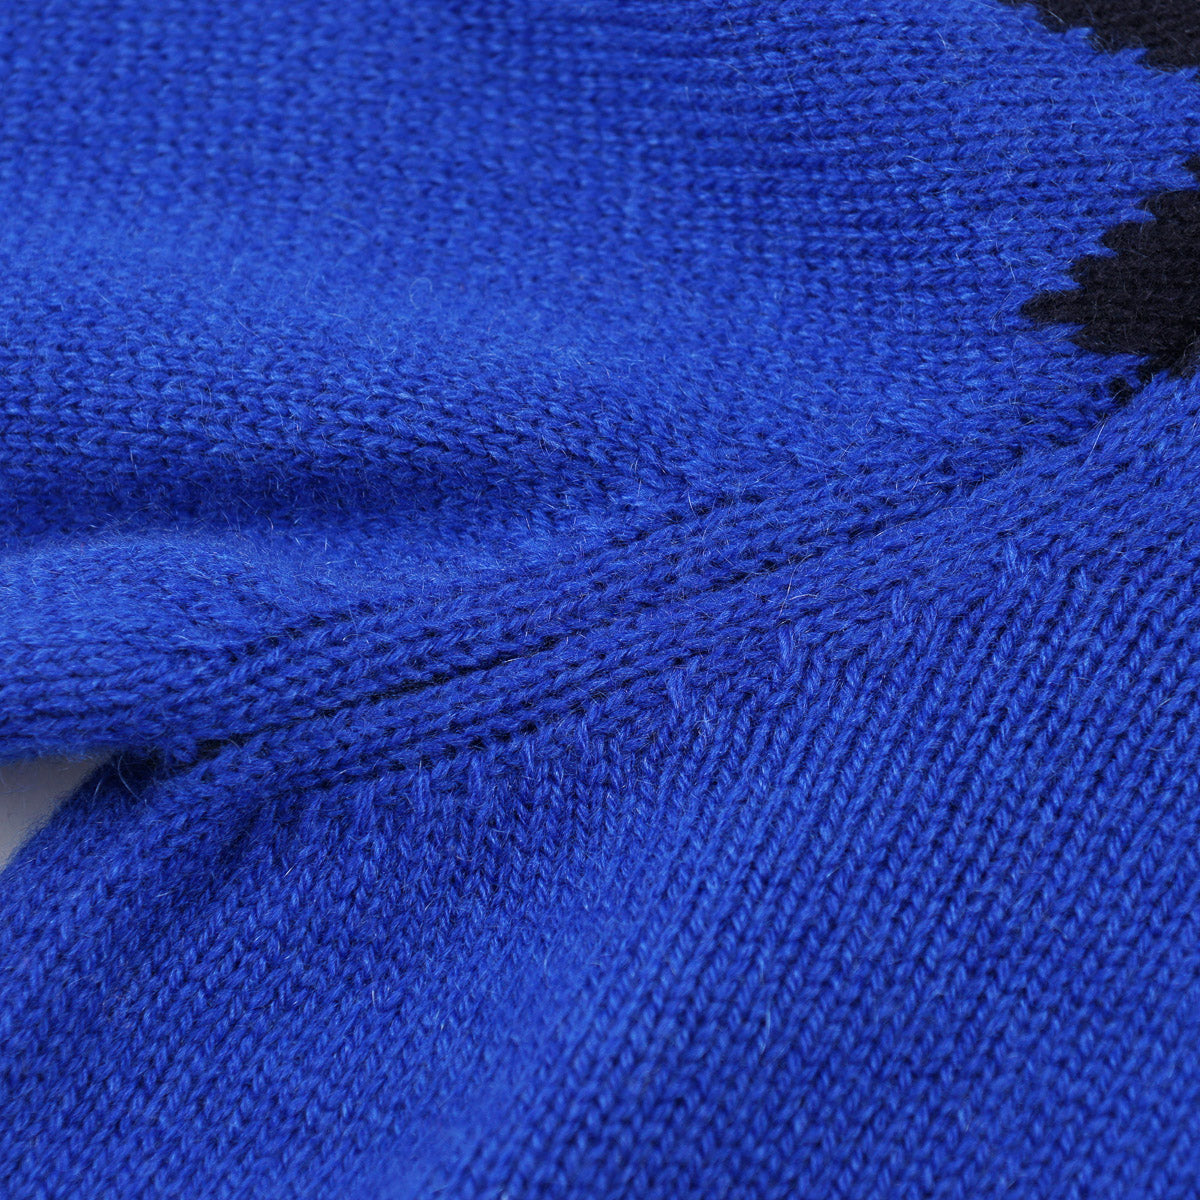 Kiton Slim-Fit Chevron Cashmere Sweater - Top Shelf Apparel